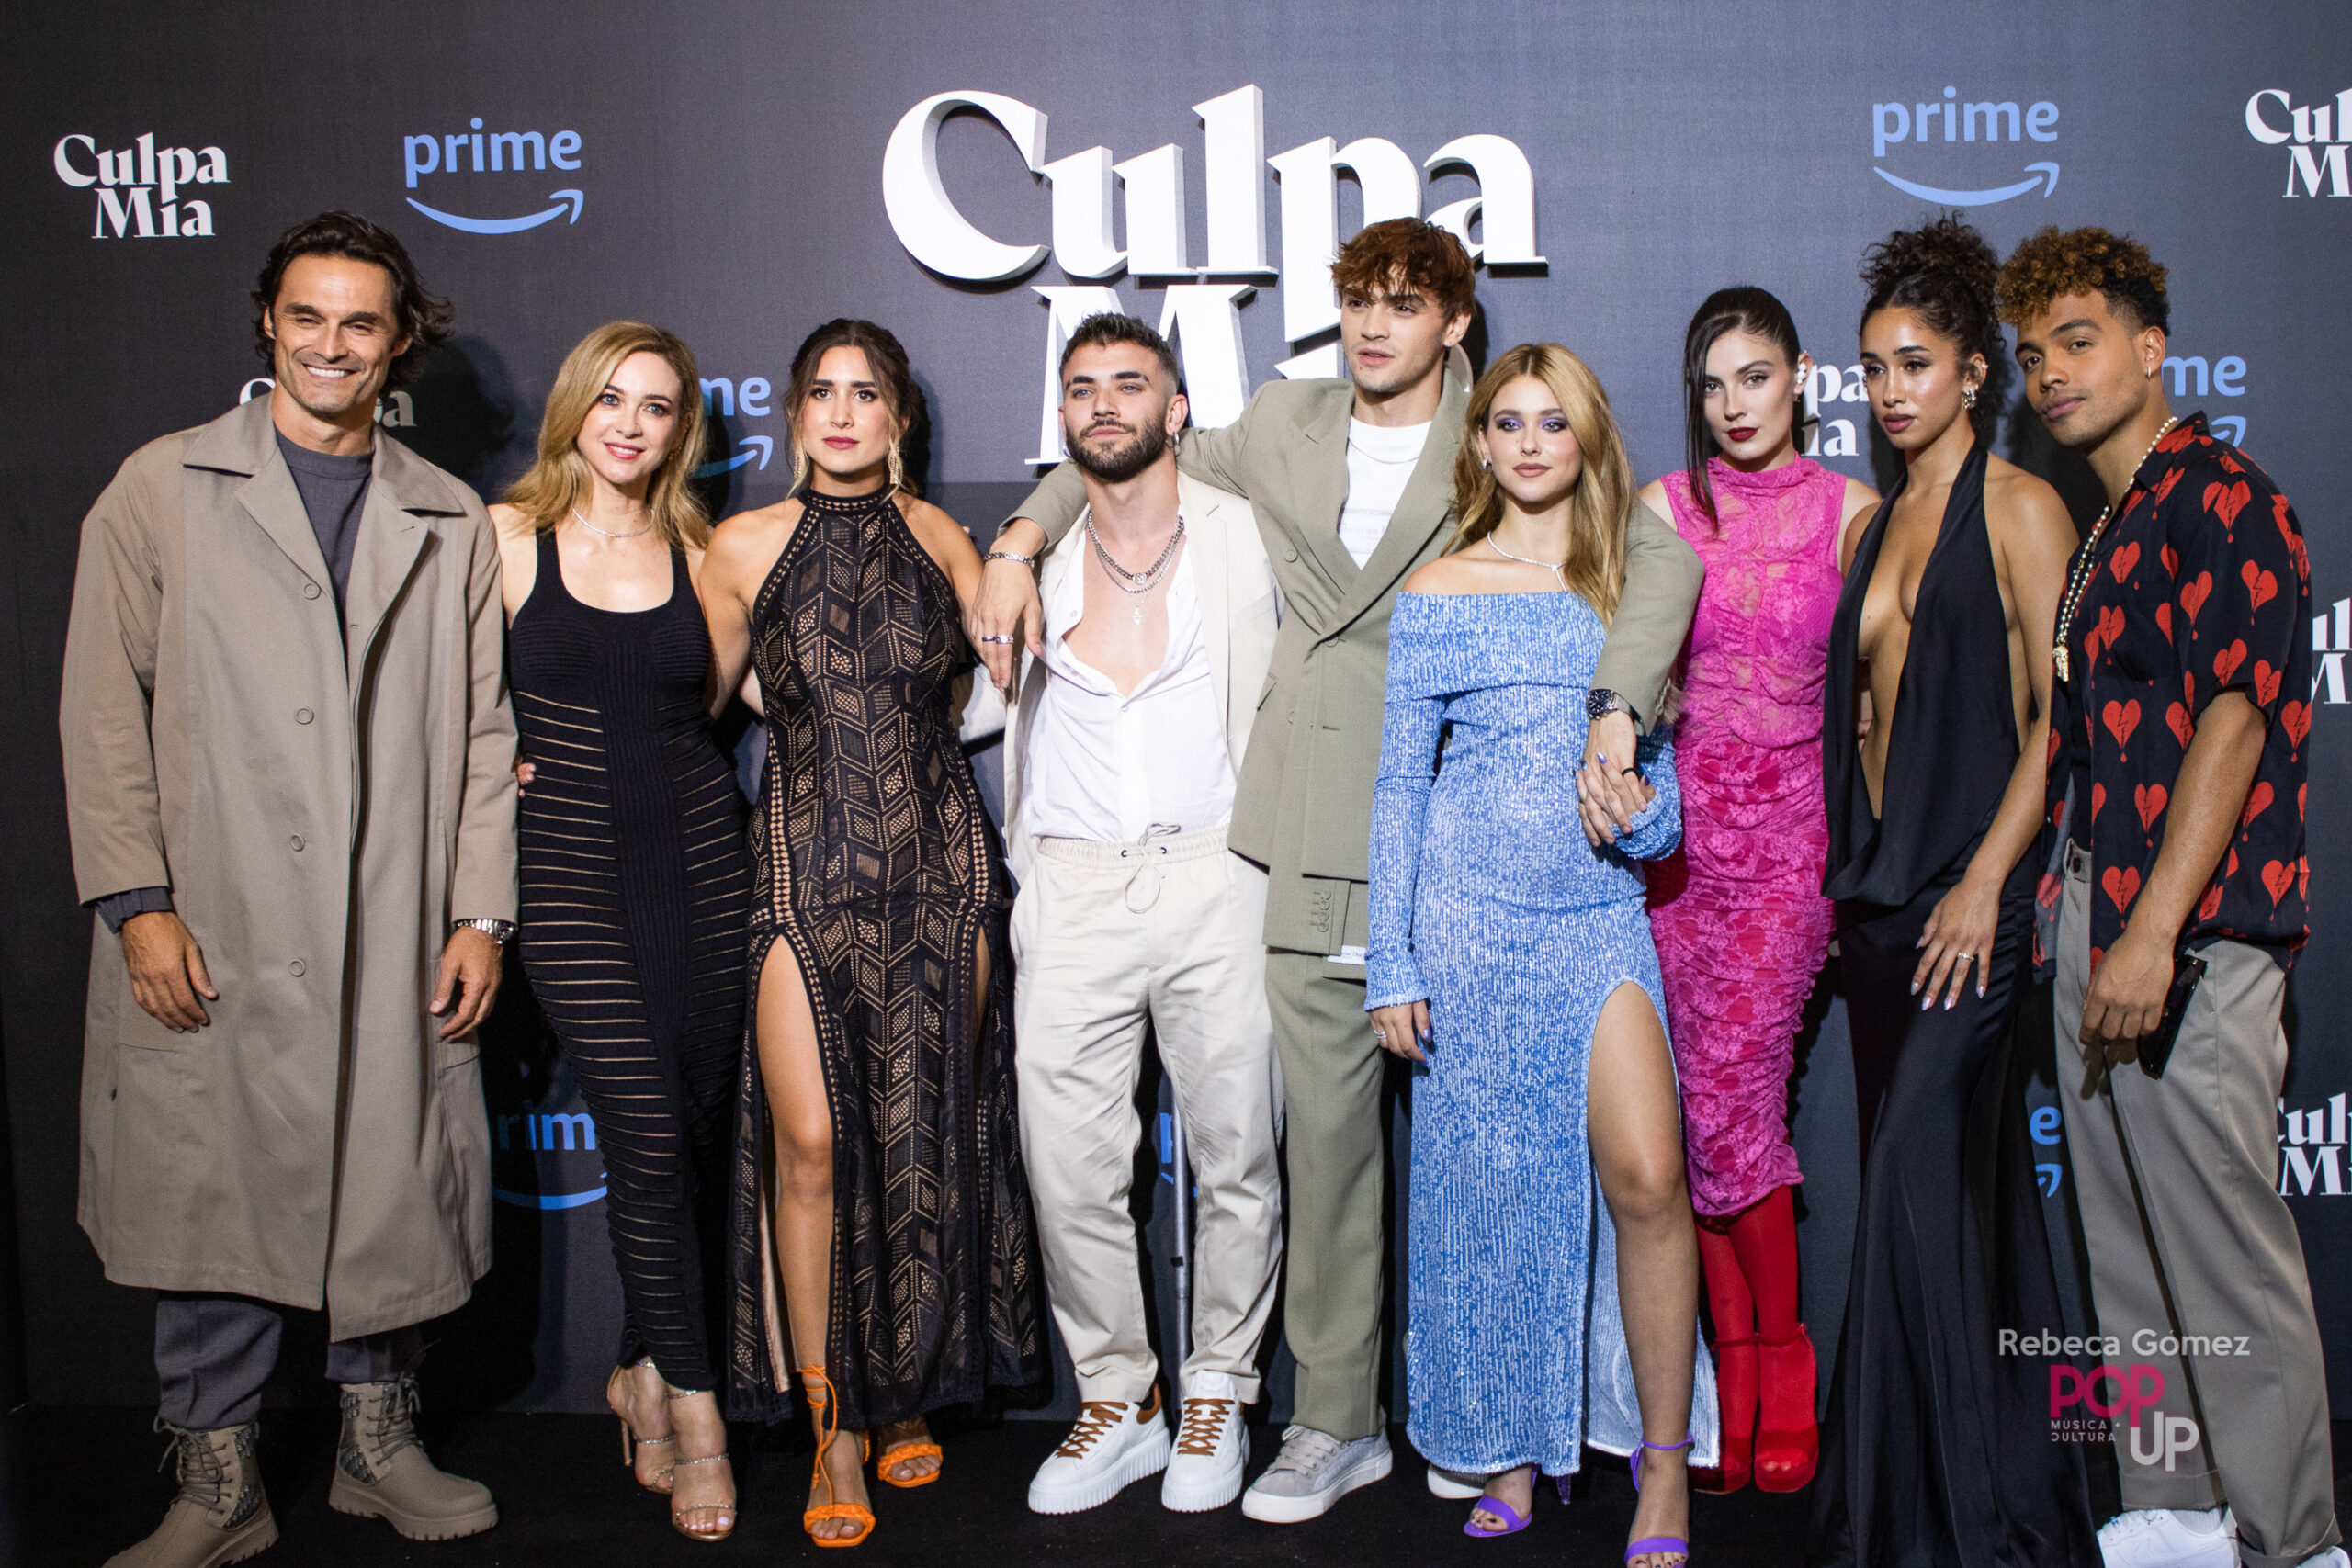 The cast of 'Culpa mía'